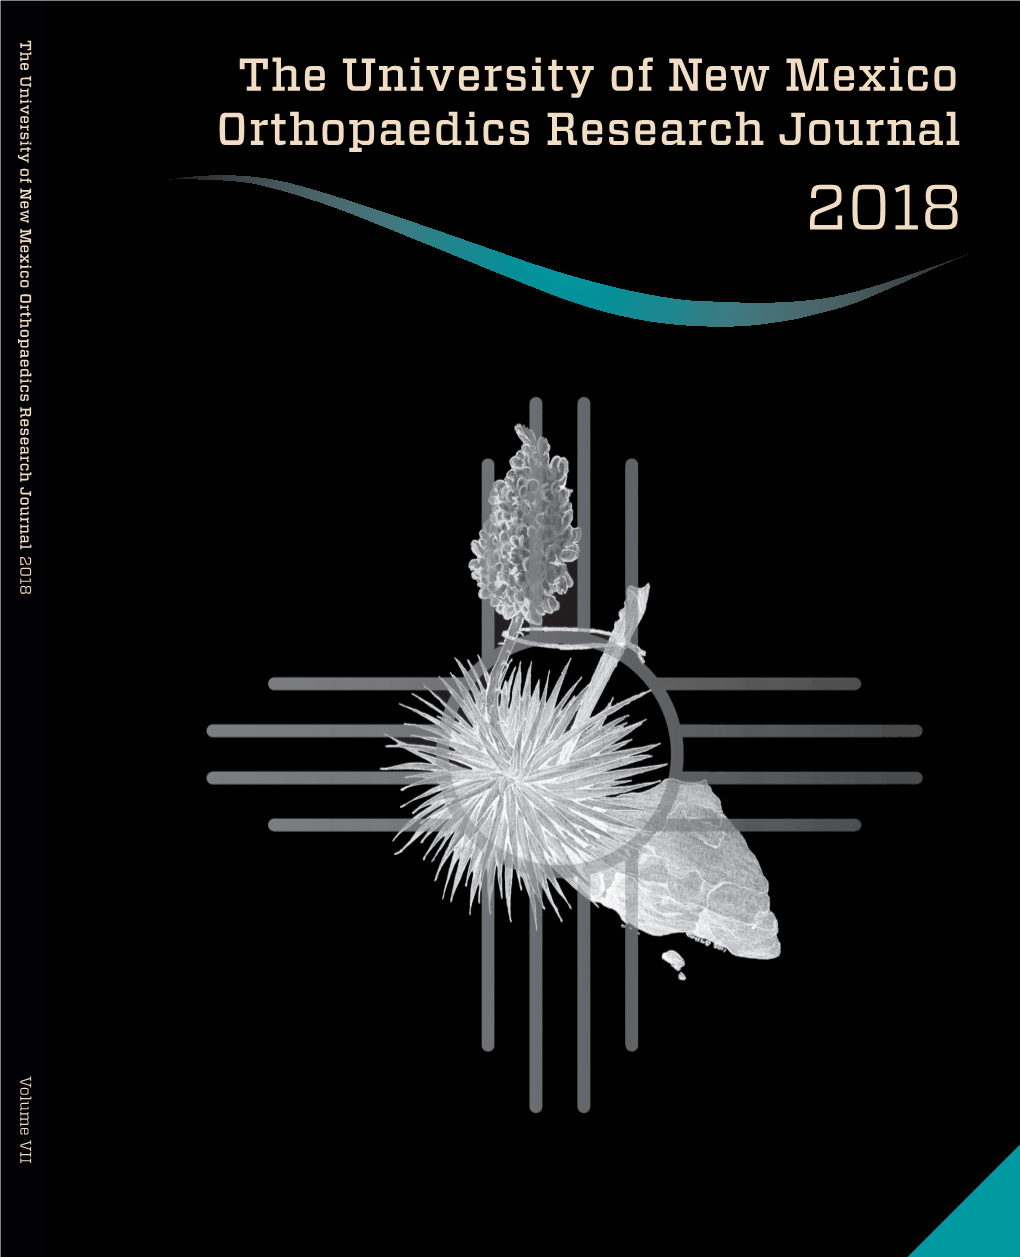 The University of New Mexico Orthopaedics Research Journal 2018 Volume VII the University of New Mexico Orthopaedics Research Journal 2018